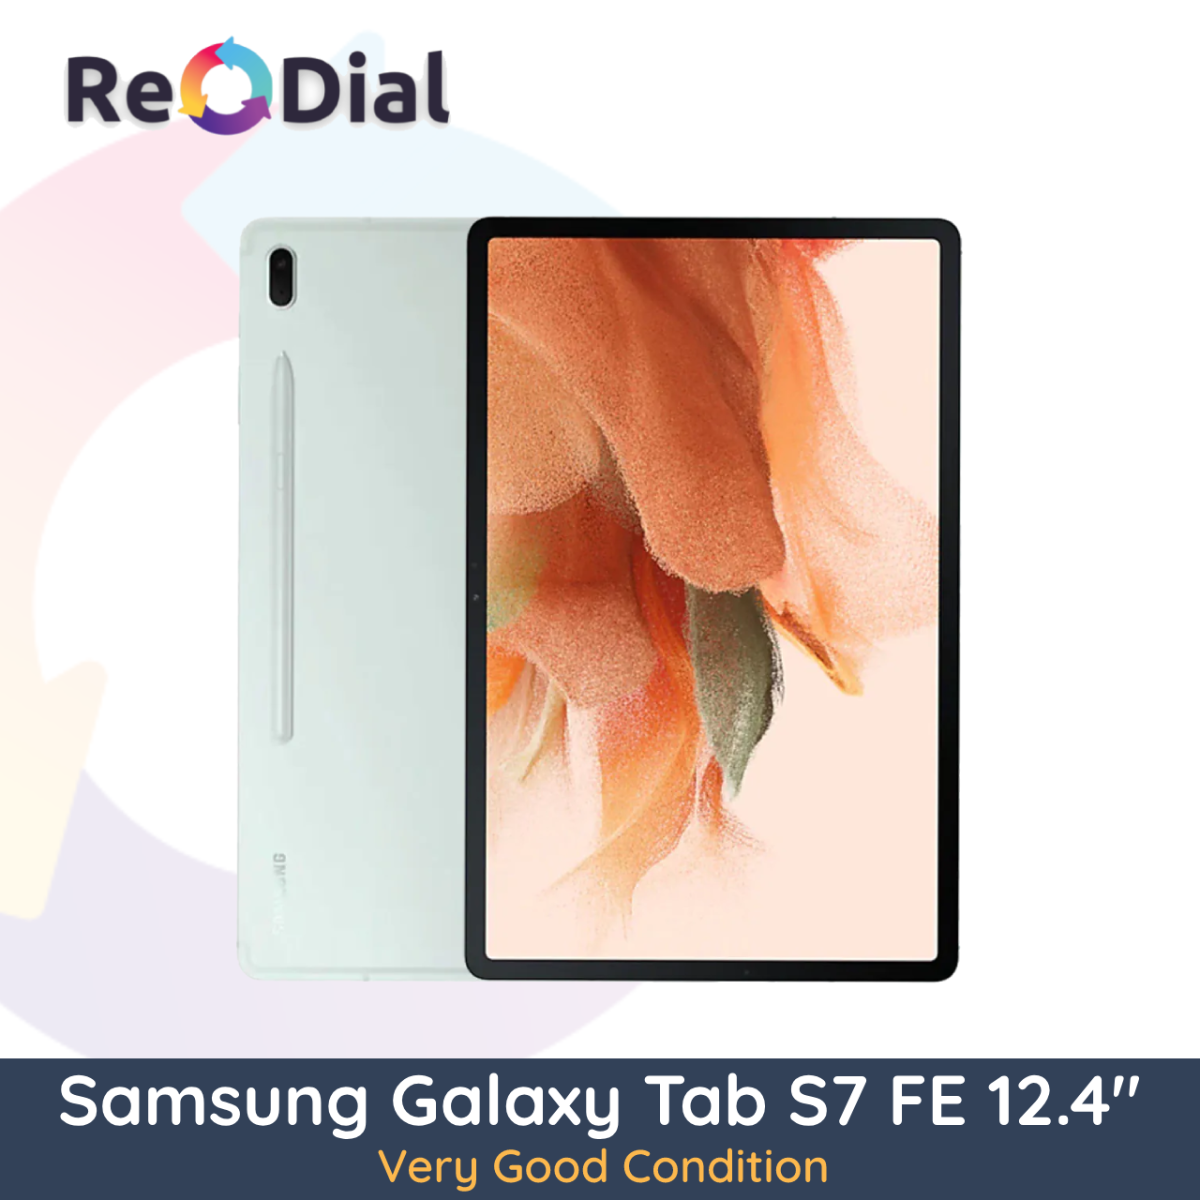 Samsung Galaxy Tab S7 FE 12.4" (2021) WiFi + Cellular - Very Good Condition